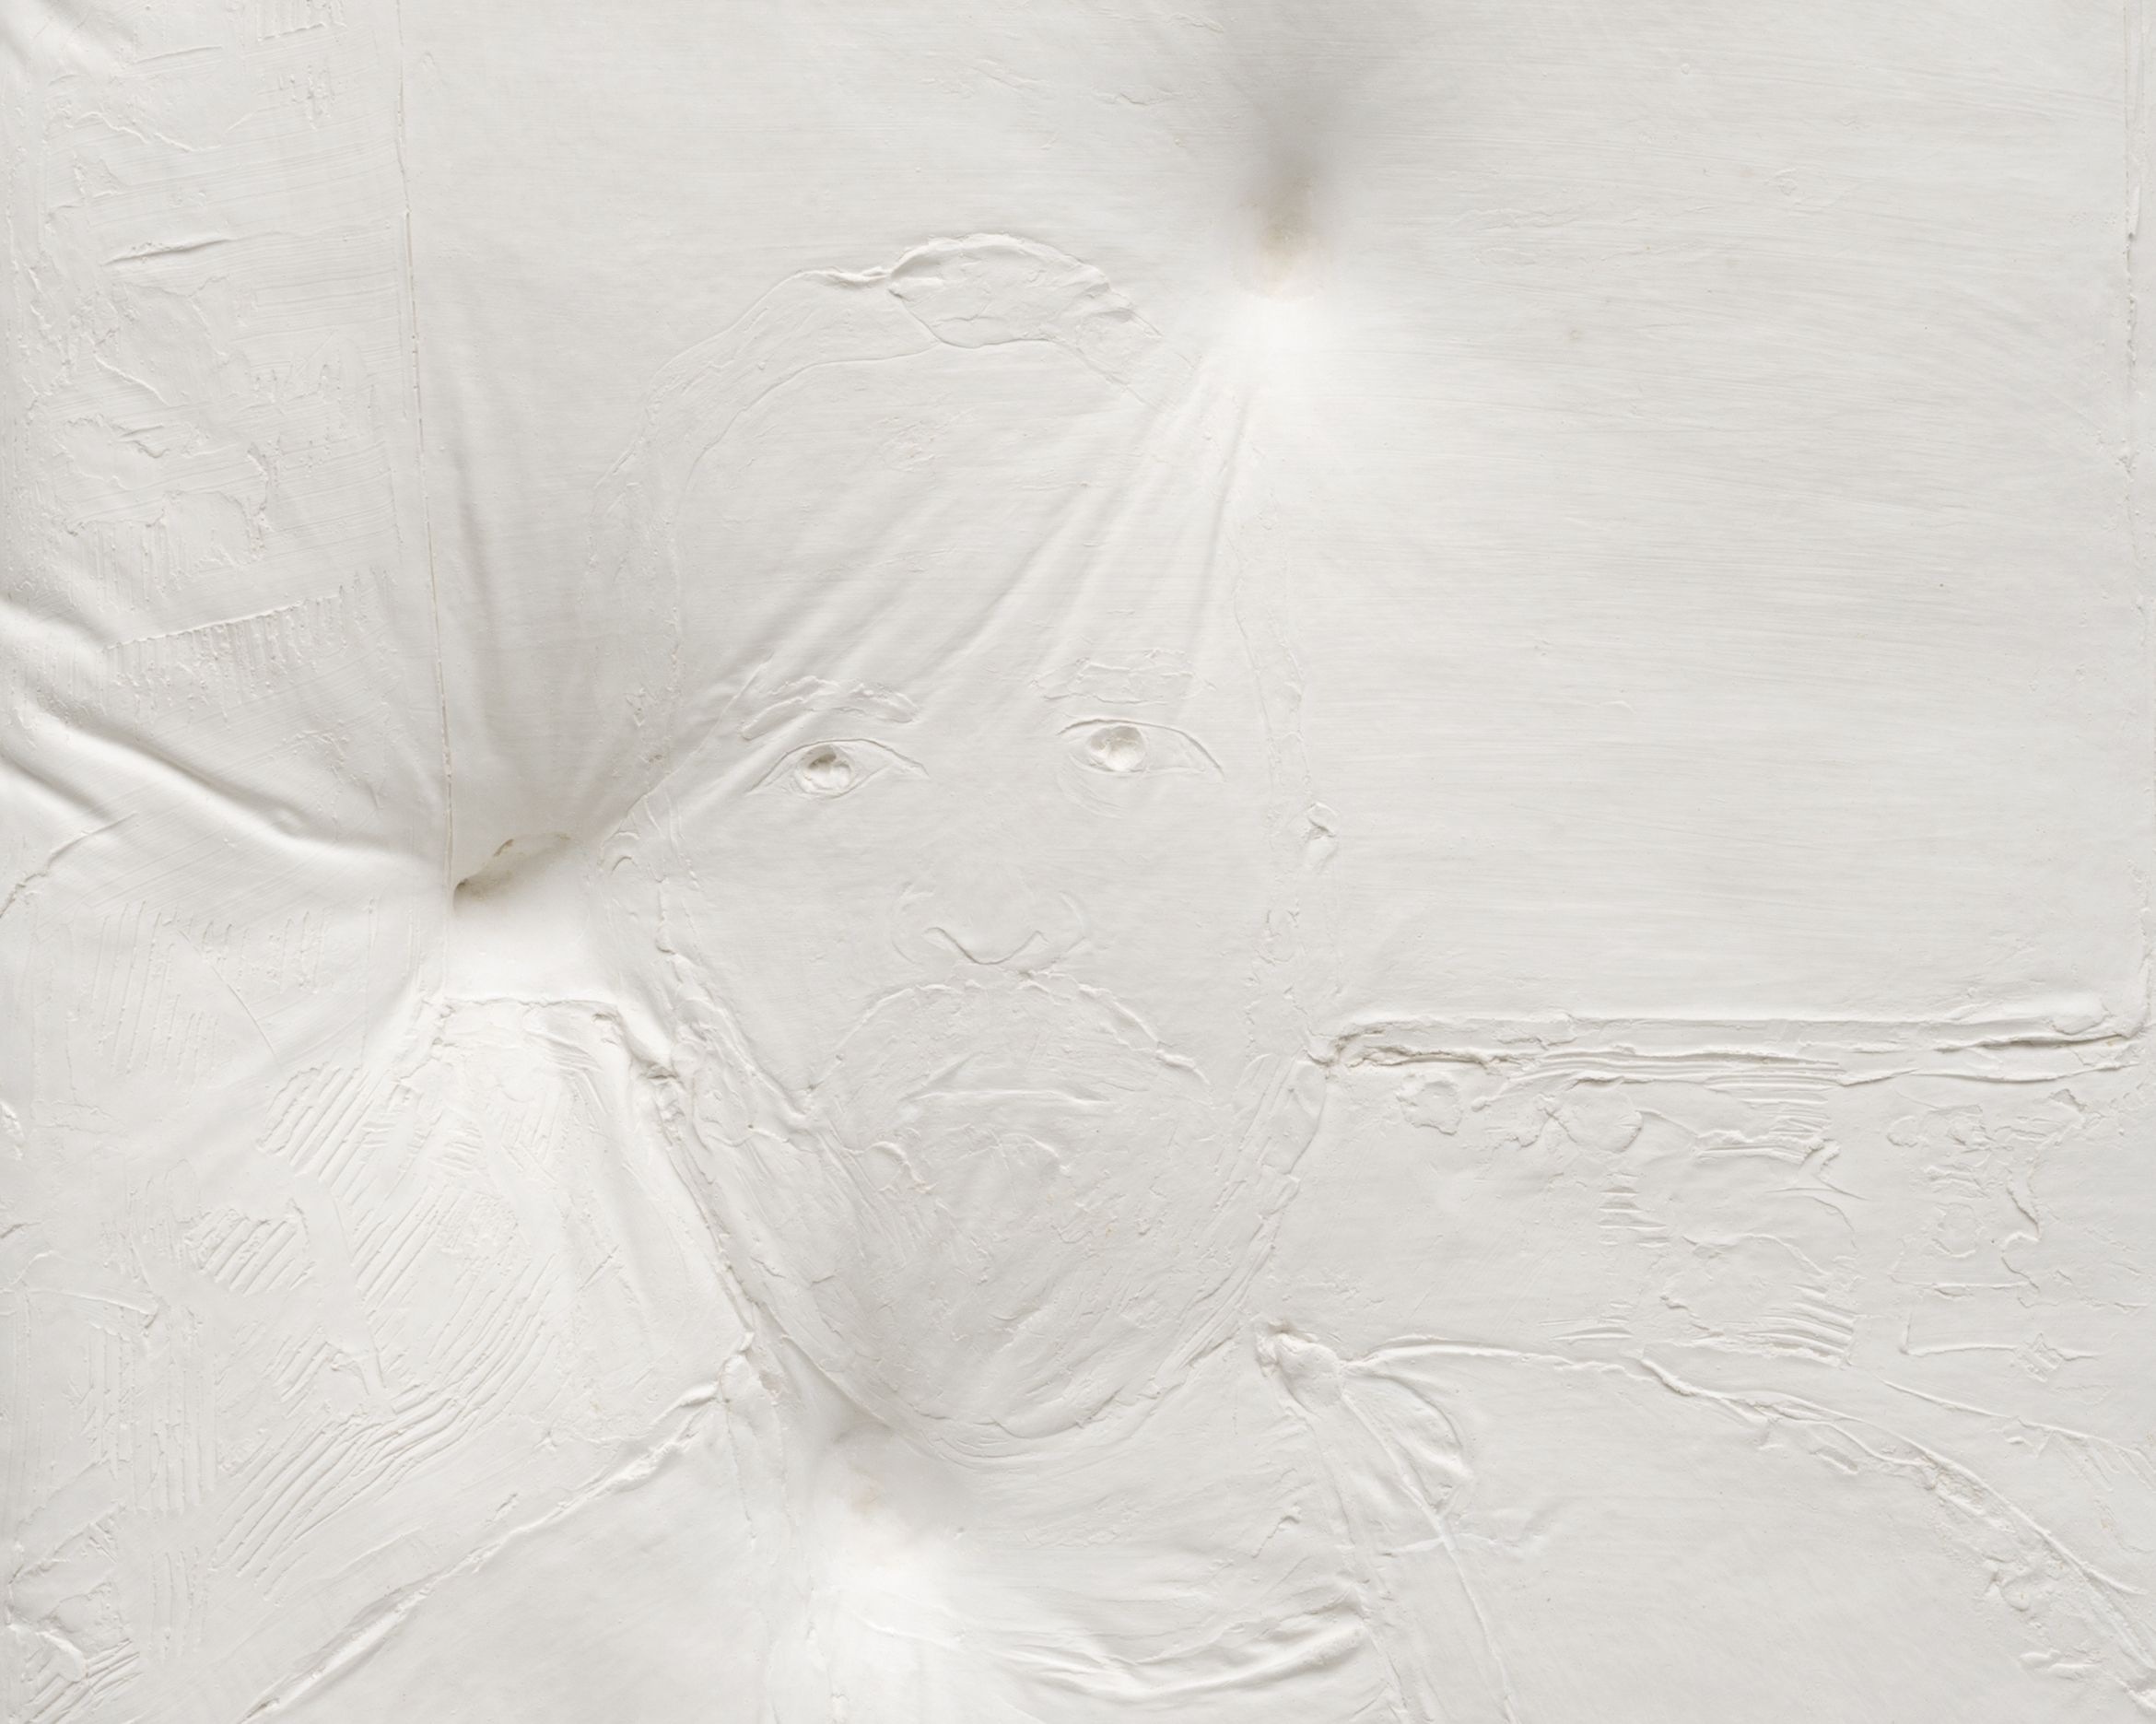  DETAIL  Untitled , 2014 Gypsum cement, fiberglass cloth, wood 34 x 30 x 8 inches 